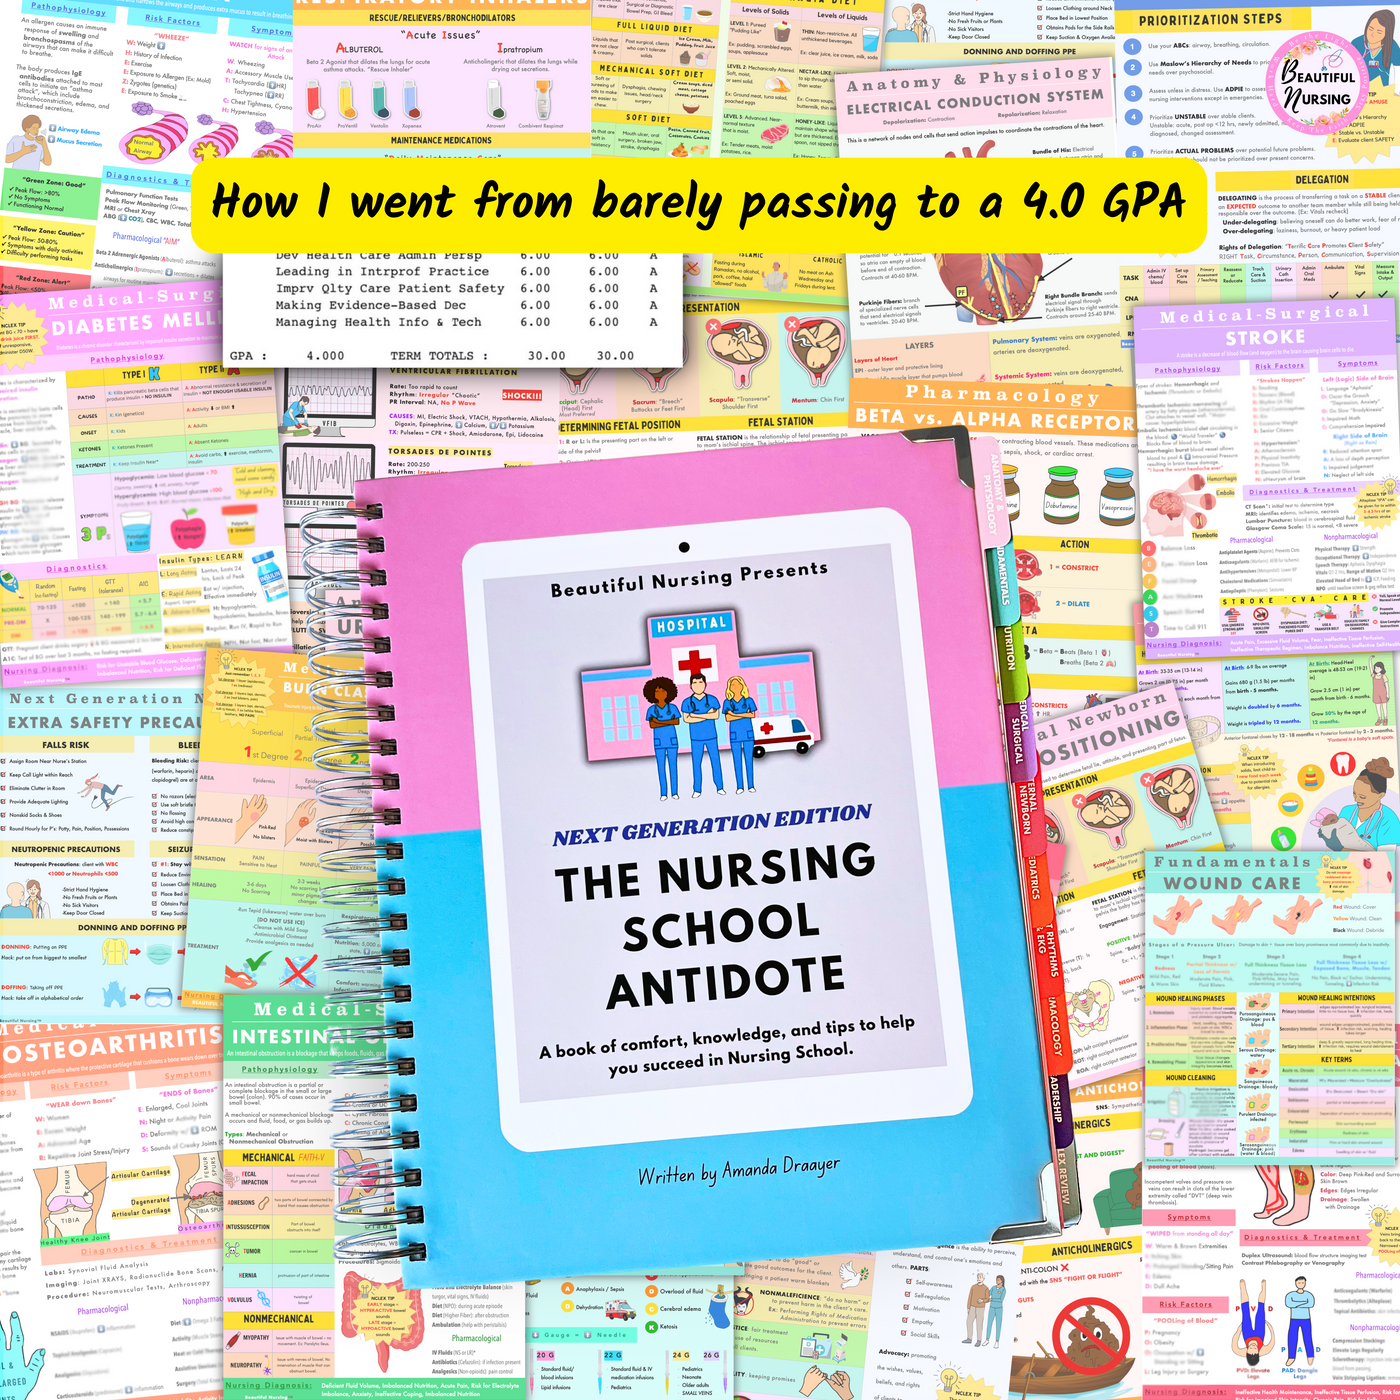 Ultimate Nursing School Essentials Kit